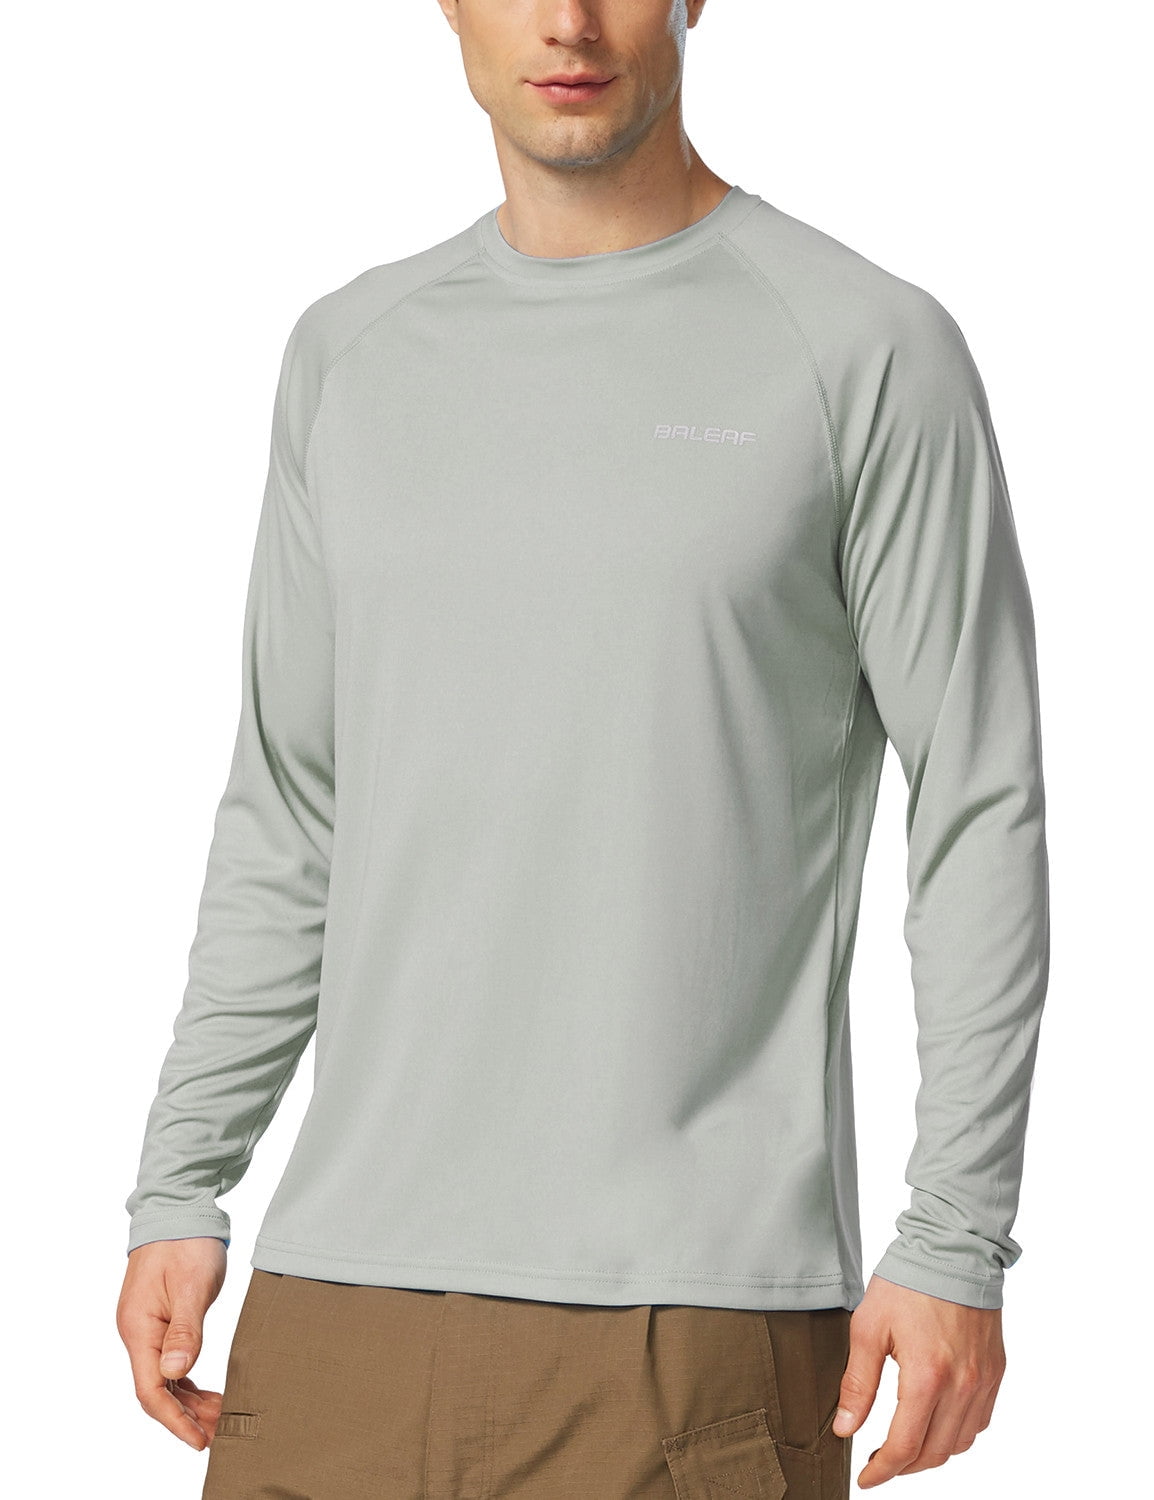 Baleaf Men's Long Sleeve Shirts Lightweight UPF 50+ Sun Protection SPF T- Shirts Fishing Hiking Running Gray Size L - Walmart.com